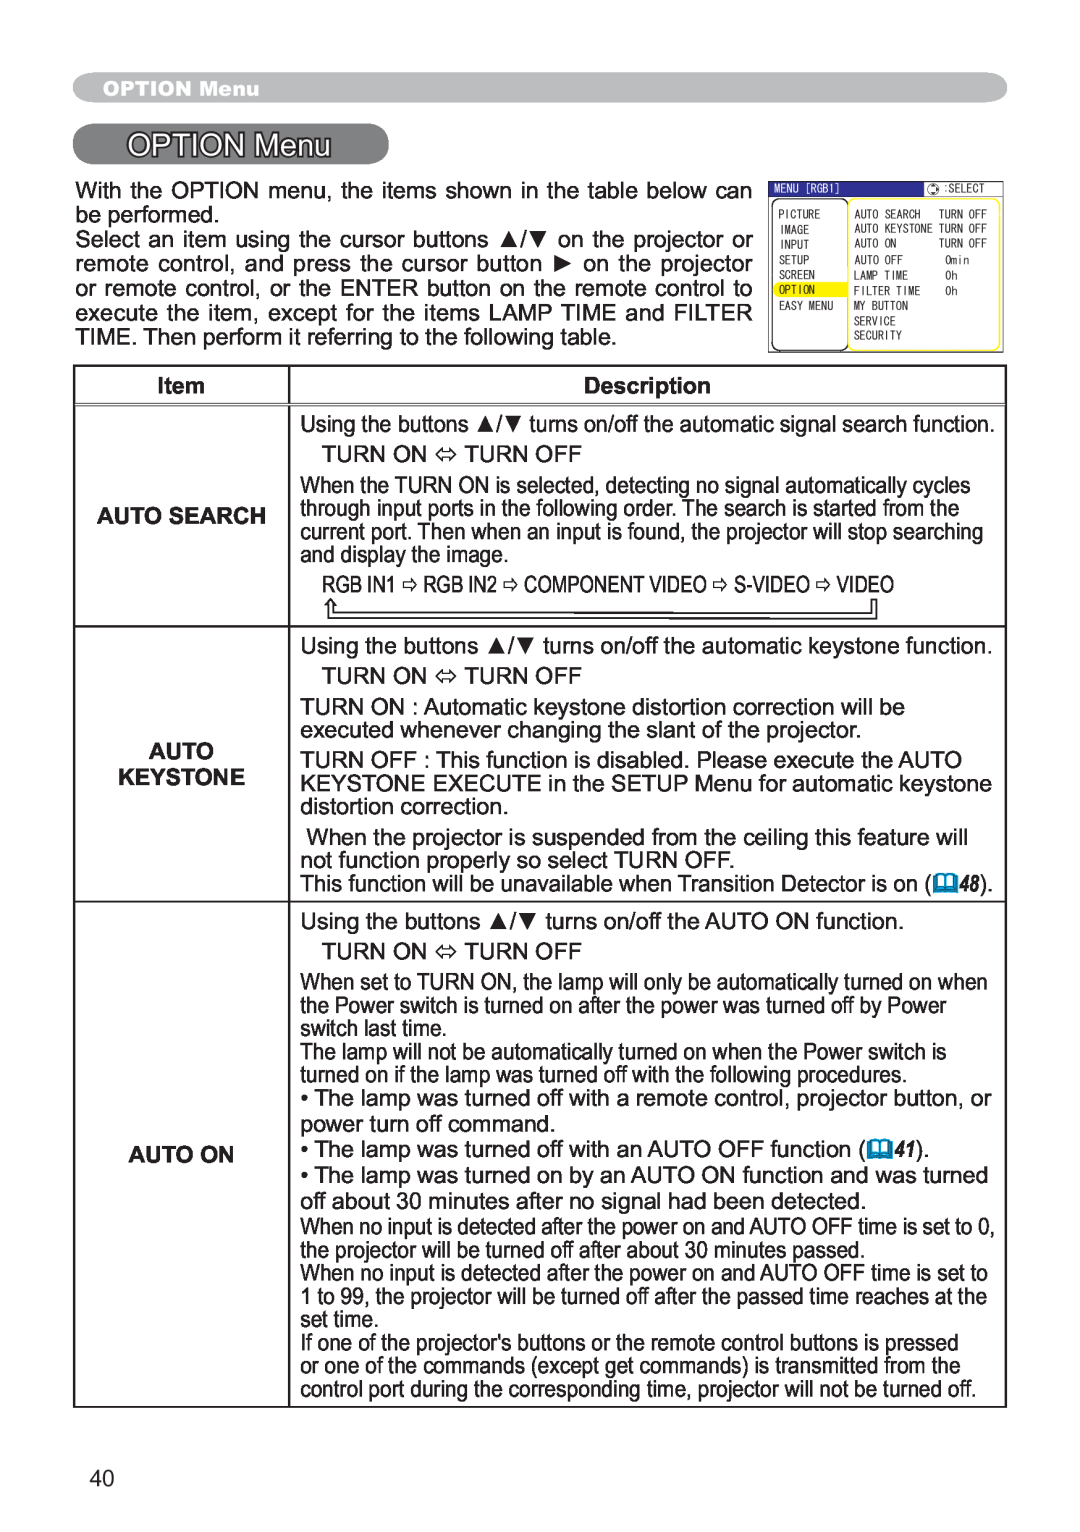 Hitachi ED-X12 user manual OPTION Menu, Item, Description, Auto Search, Keystone, Auto On 